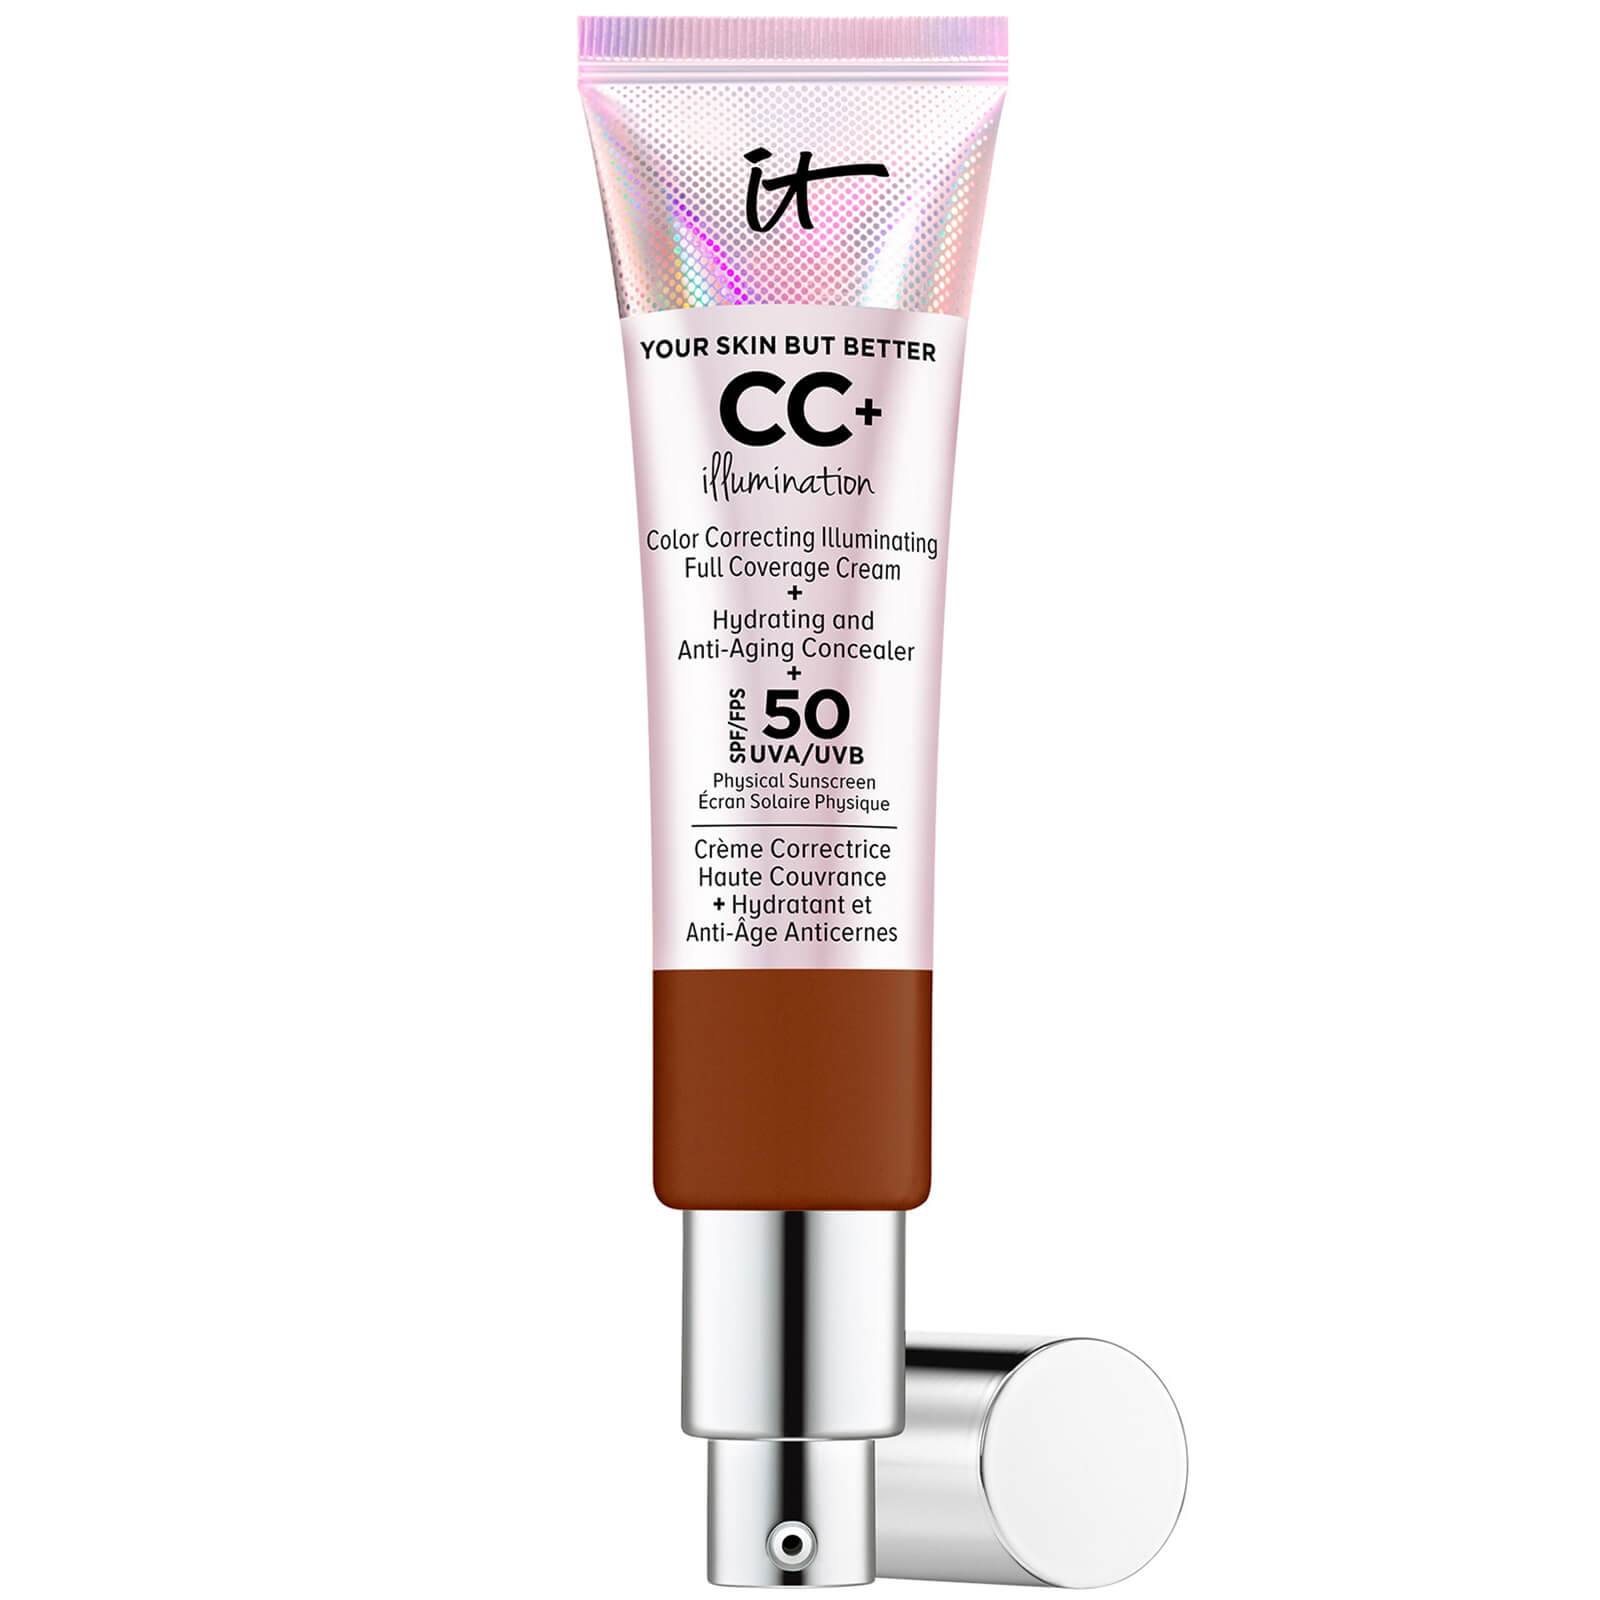 IT Cosmetics Your Skin But Better CC+ Illumination SPF50 32ml (Various Shades) - Deep